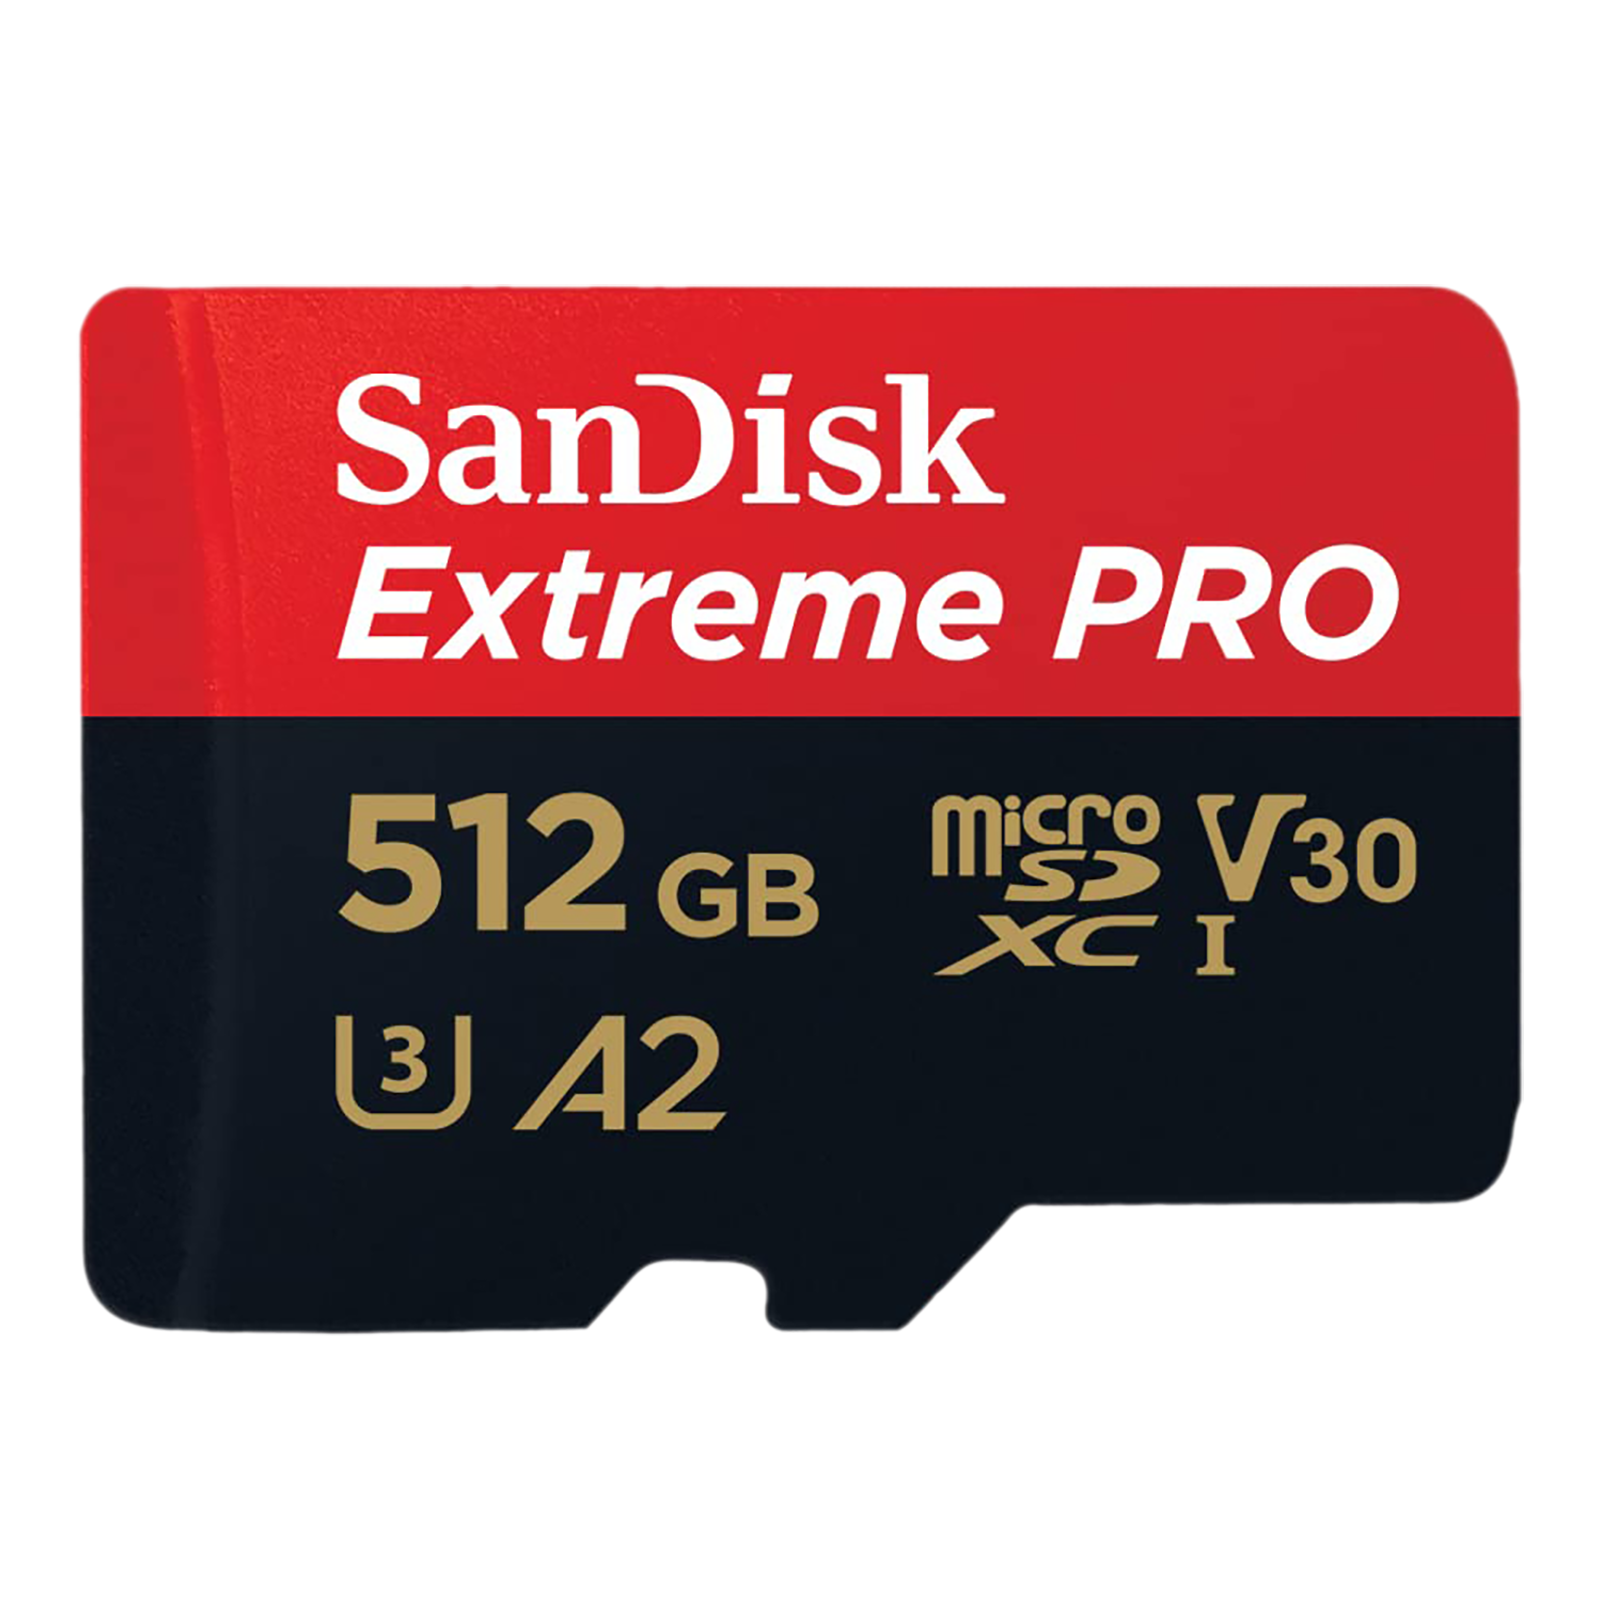 SanDisk Extreme Pro MicroSDXC 512GB Class 3 200MB/s Memory Card